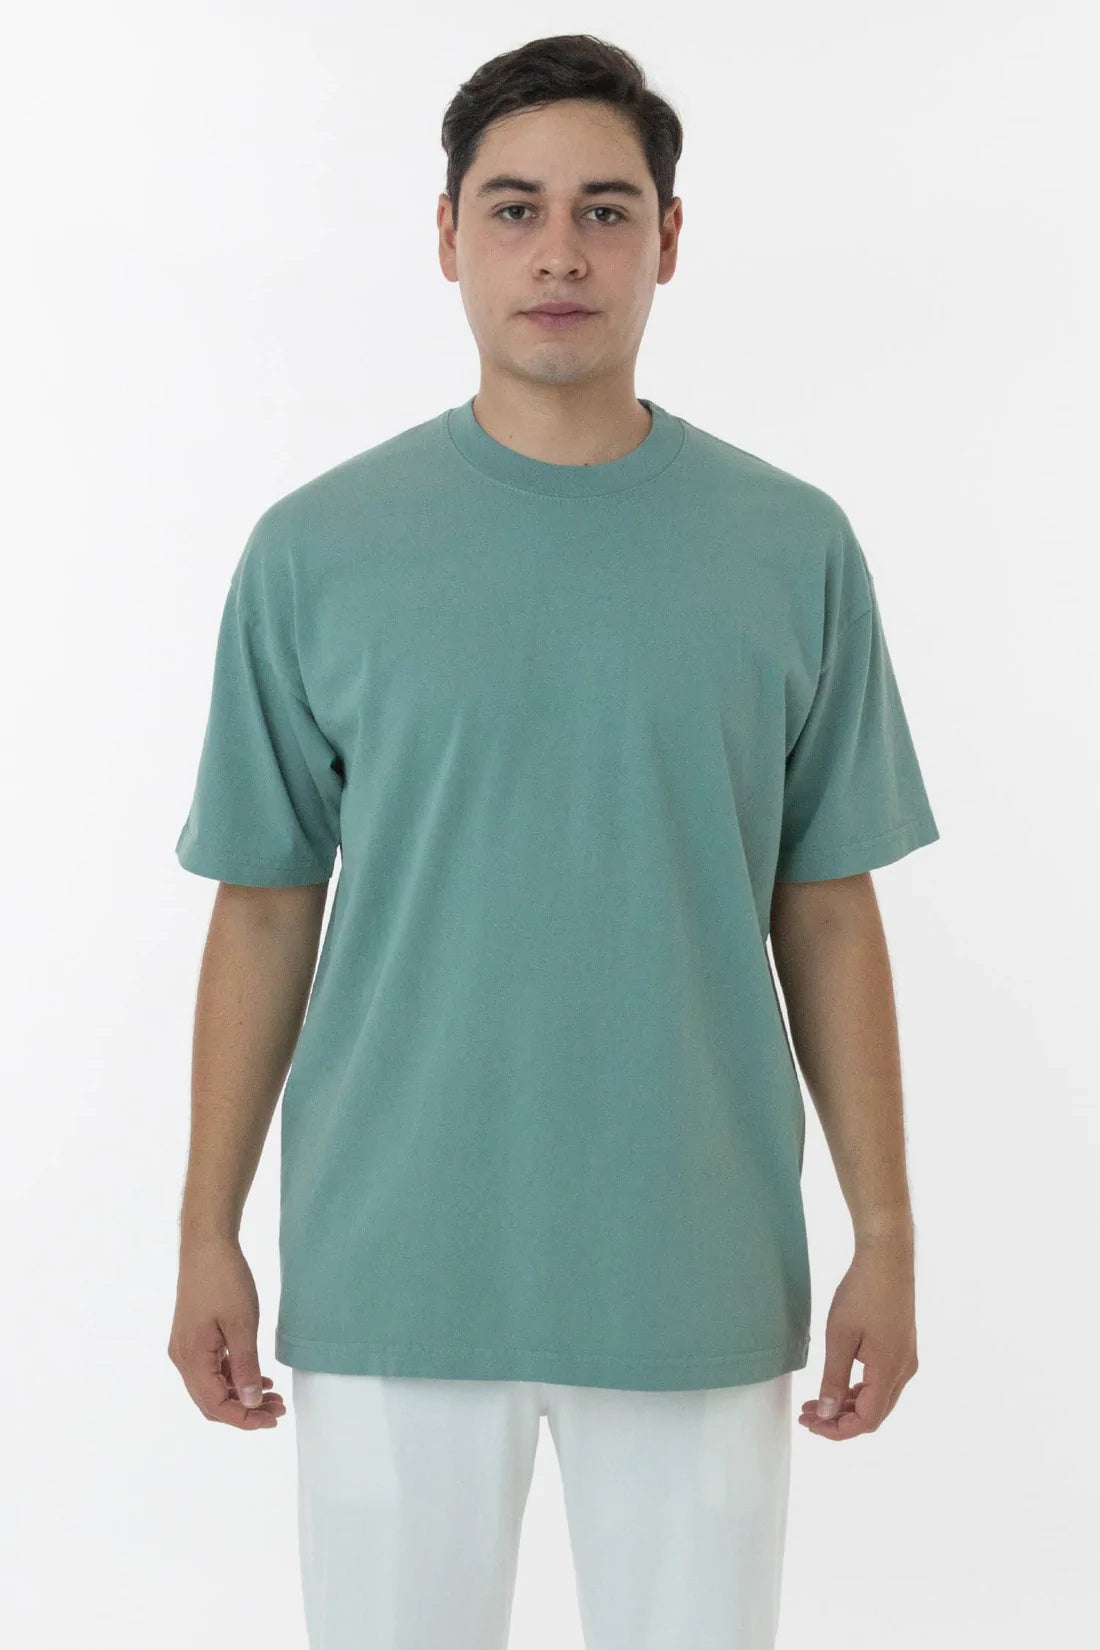 6.5 Oz. Garment Dye Crewneck T-Shirt - New Colors, Regular Size